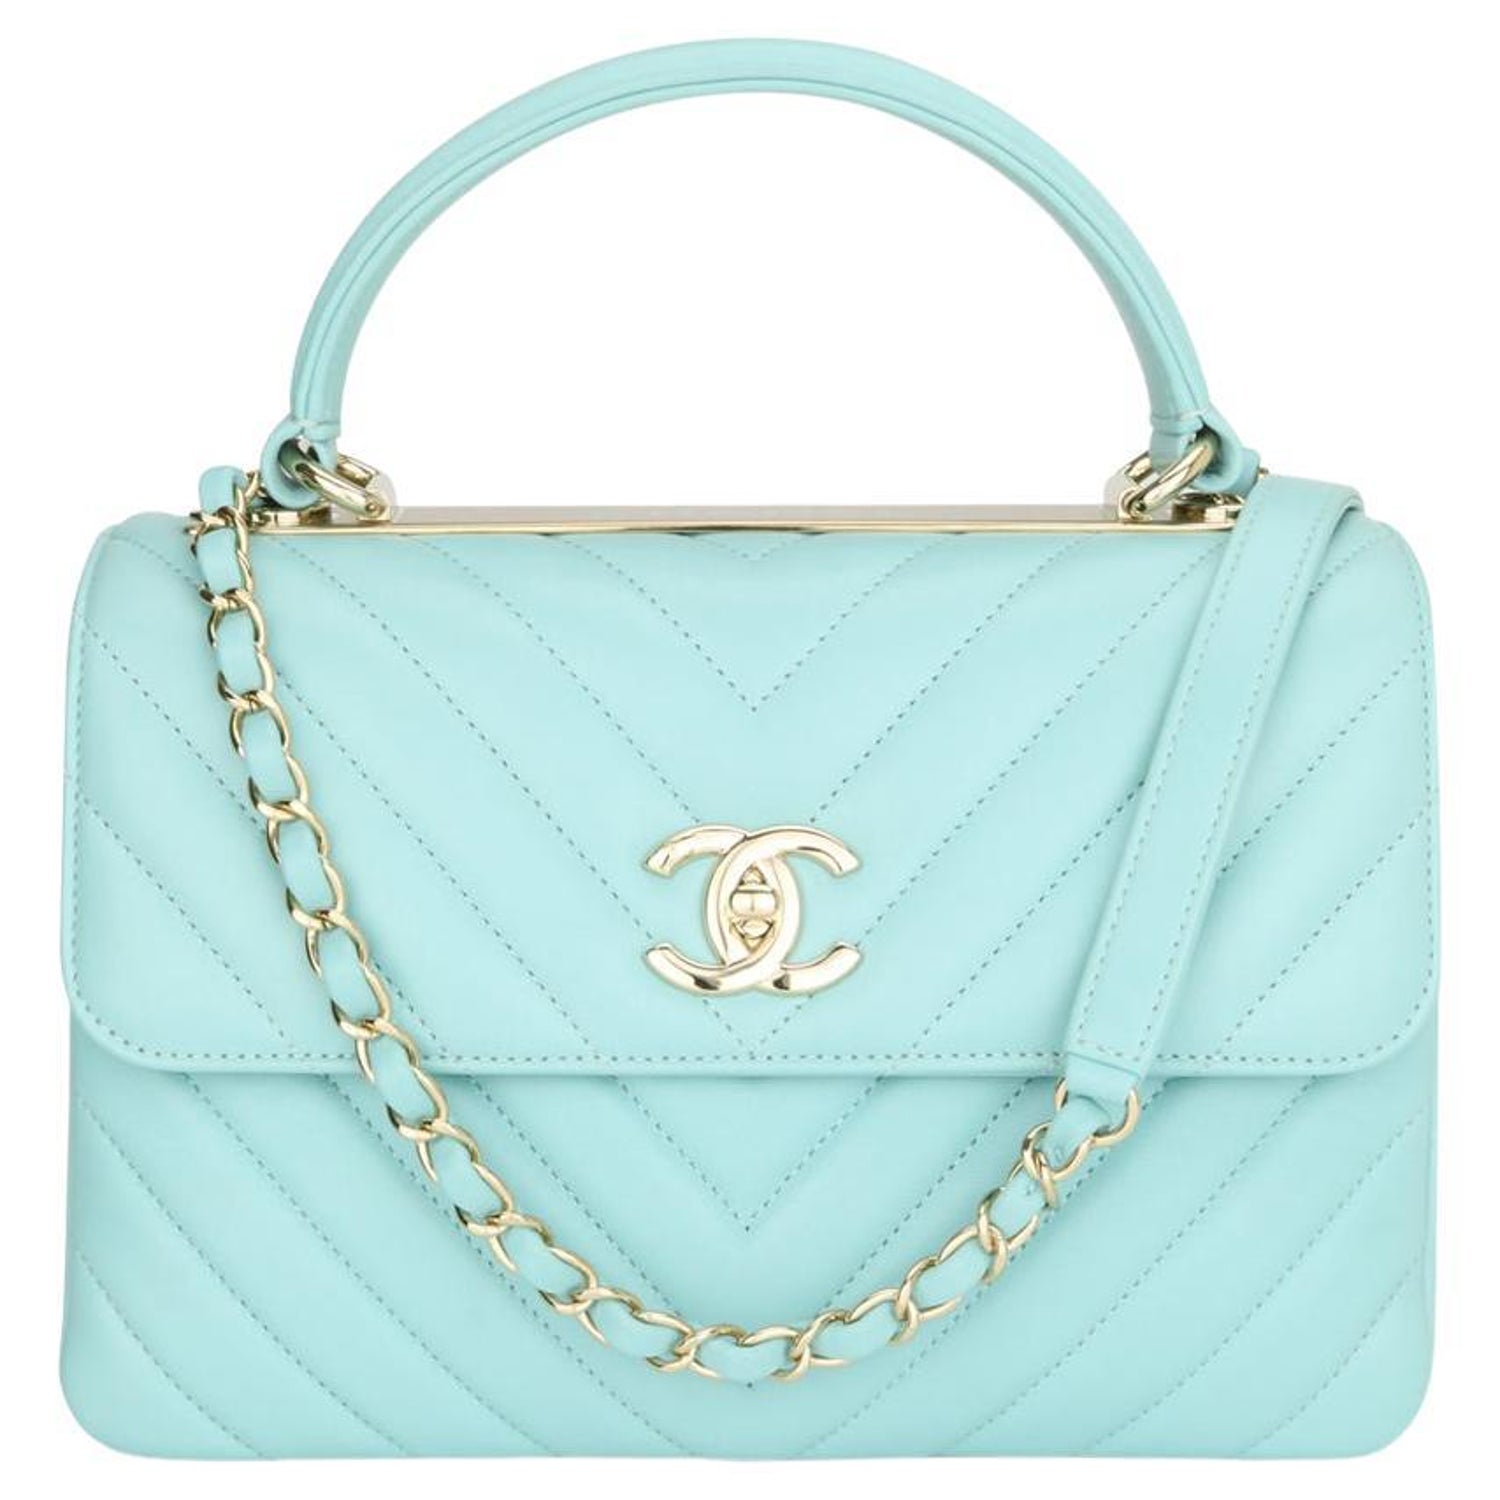 Chanel Tiffany Blue Bag - For Sale on 1stDibs